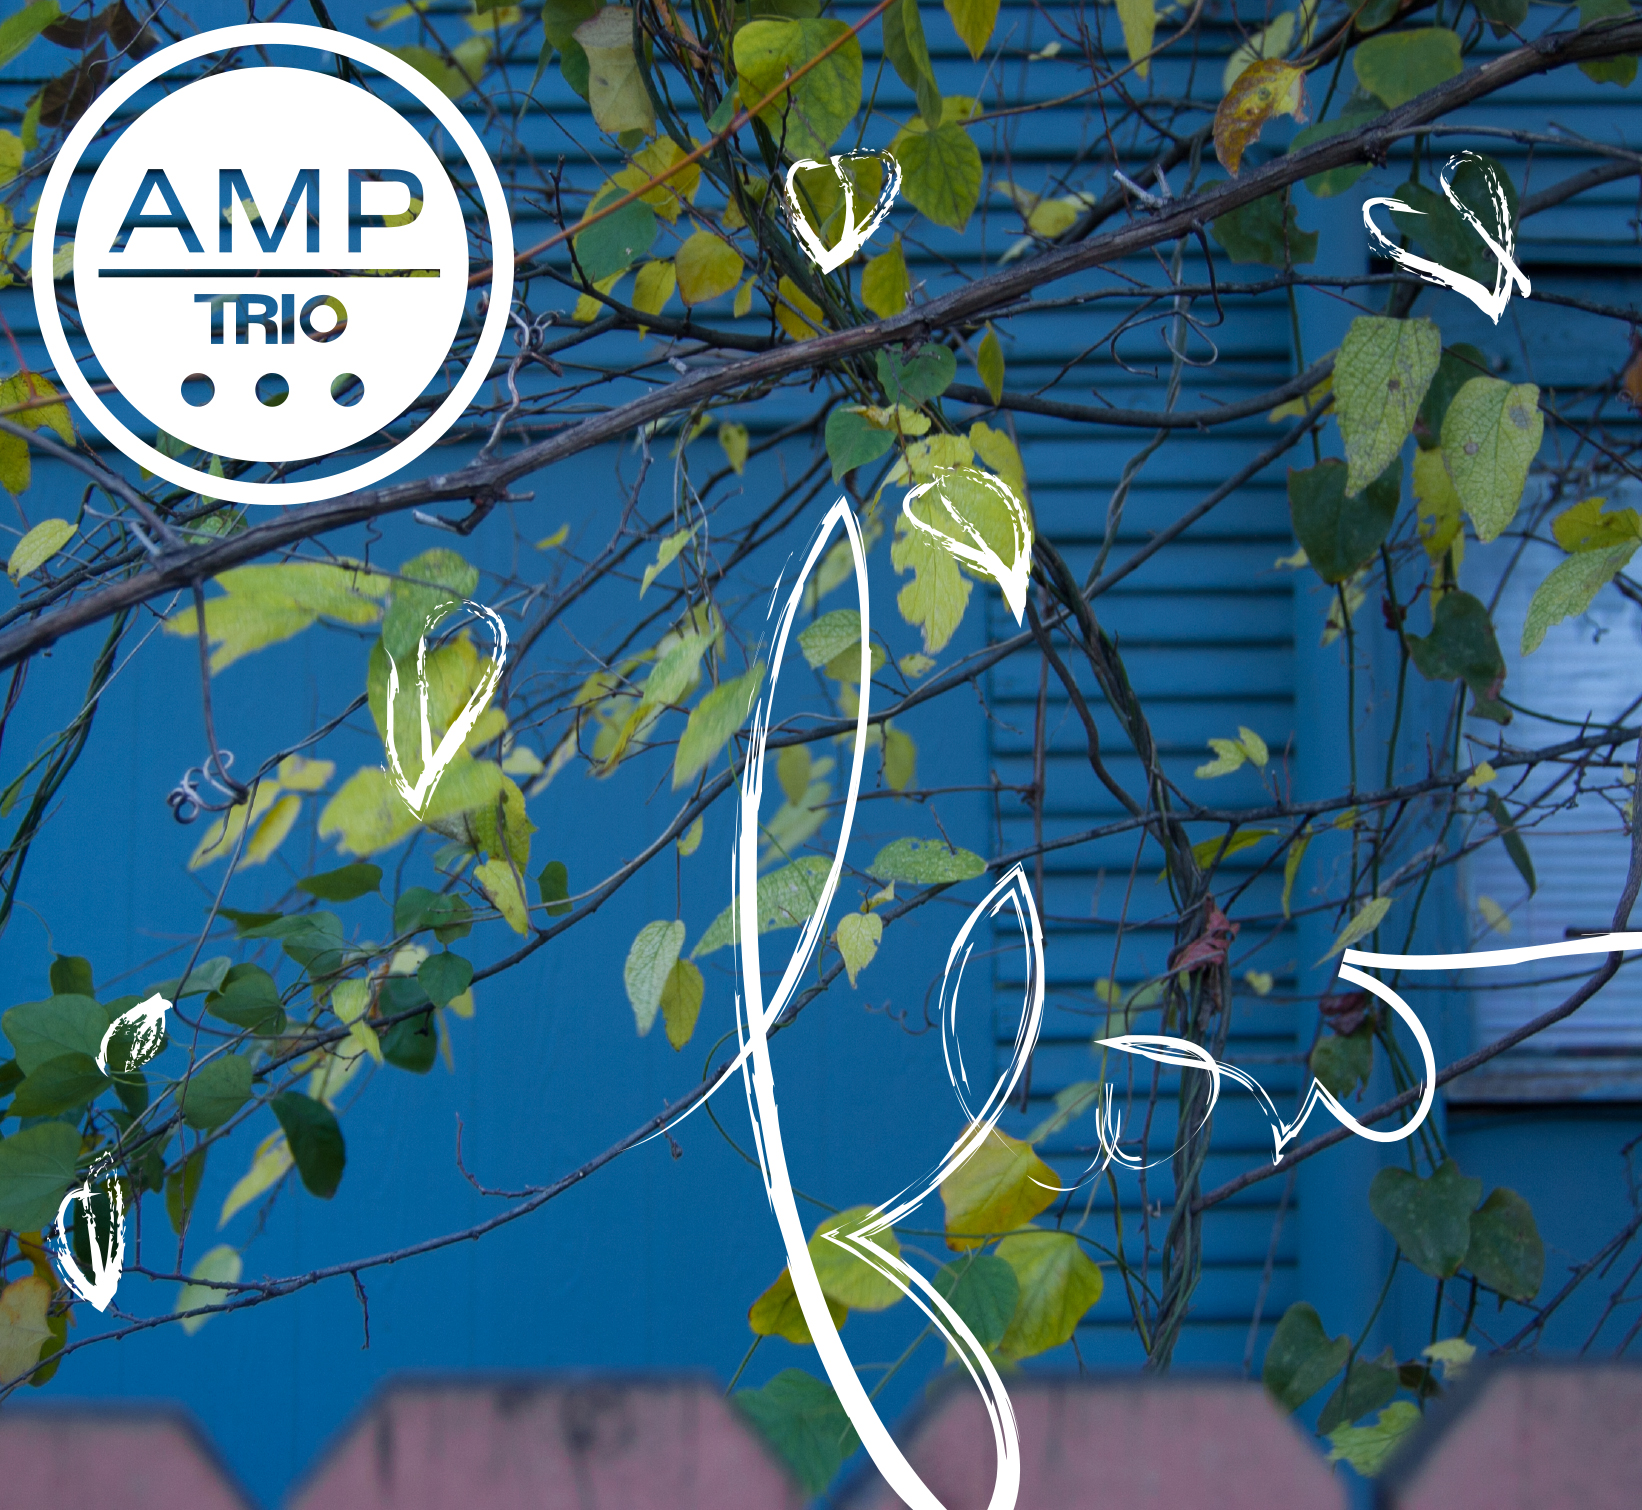 Album art work of Flow by AMP Trio